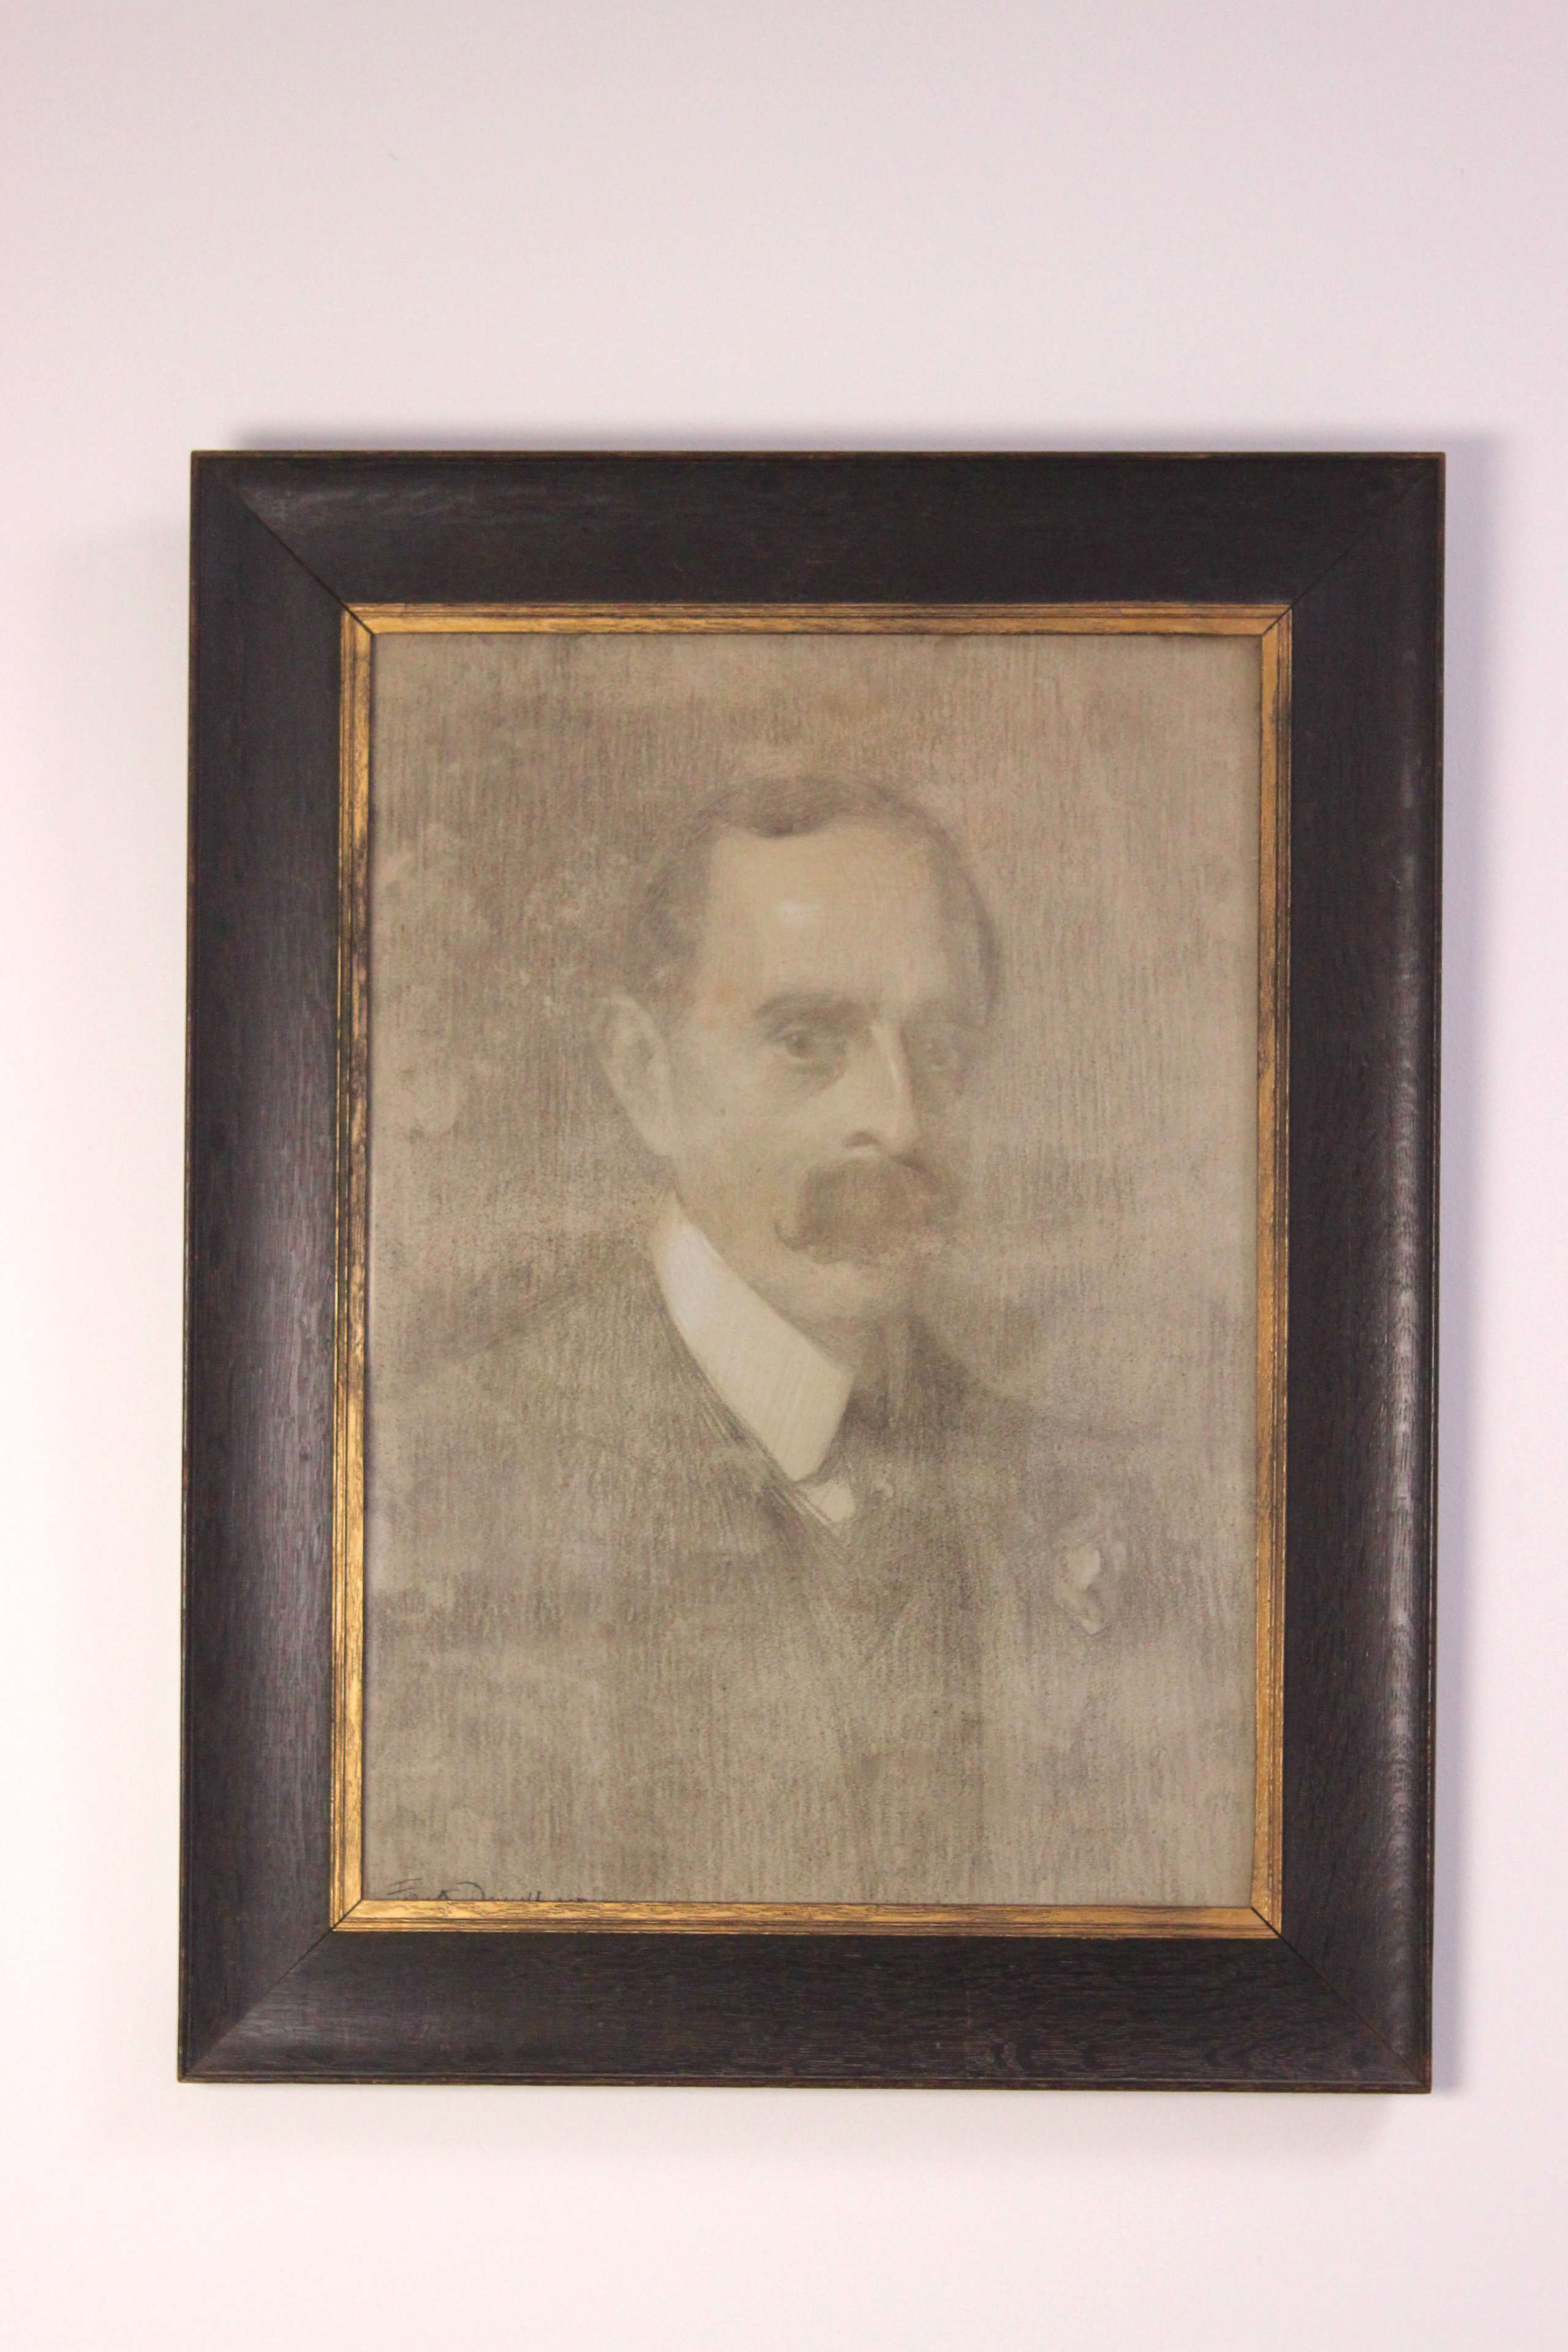 Graphite portrait of an English gentleman  signed Frank Darvil 1904